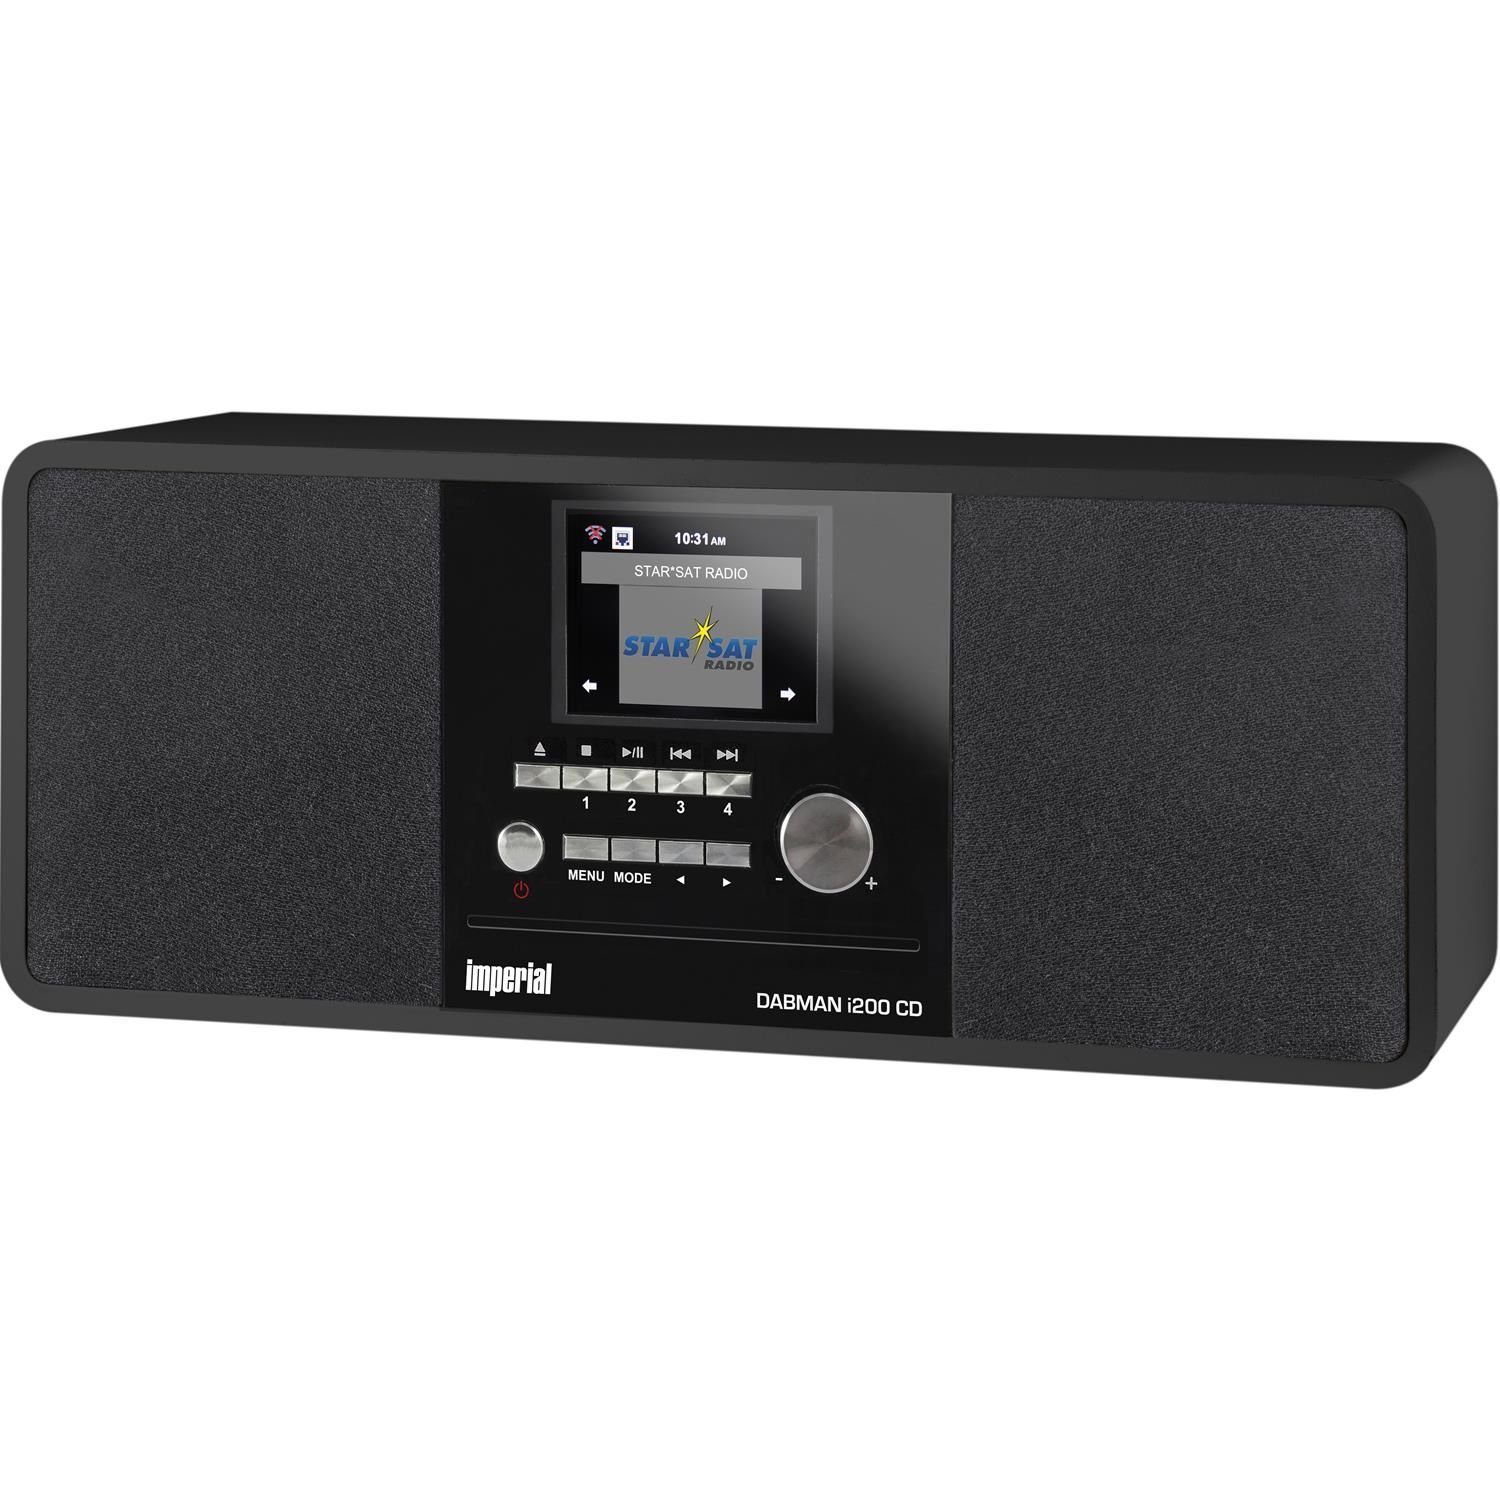 IMPERIAL mit W, (DAB), CD-Player Sound, UKW by UKW, Digitalradio DABMAN CD TELESTAR Internetradio, (DAB) mit i200 (Digitalradio RDS, 20 (Stereo WLAN)